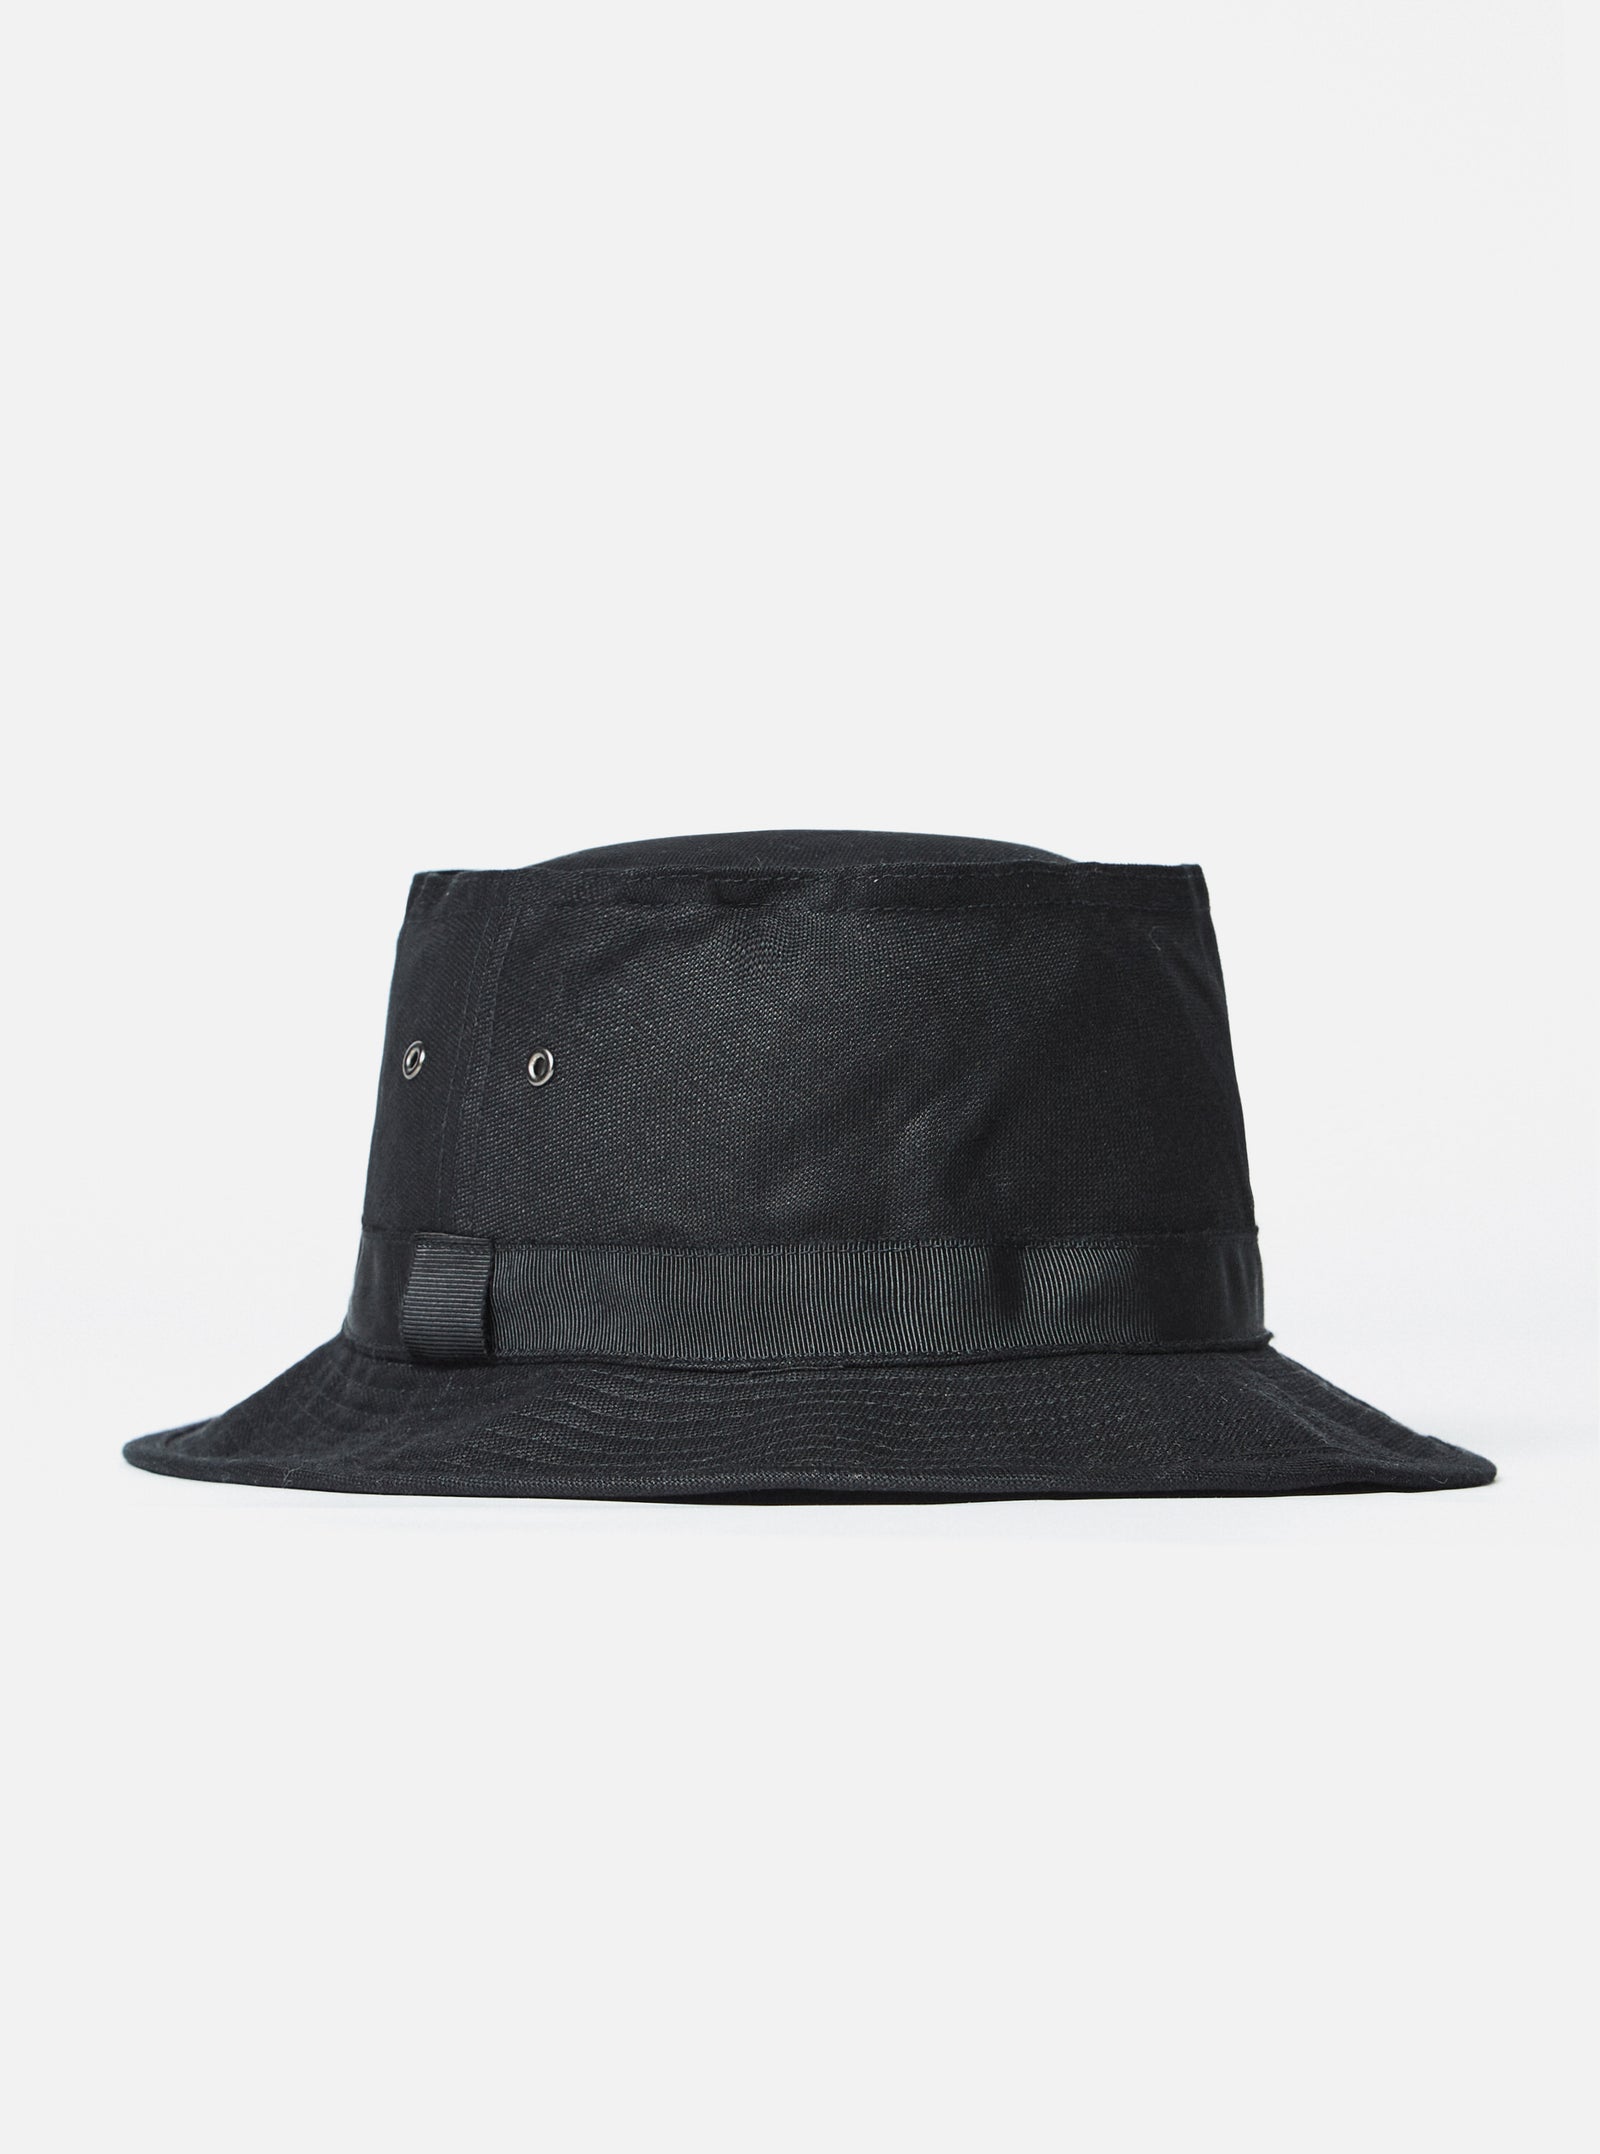 cableami® Pork Pie Hat in Black Linen/Cotton Oxford